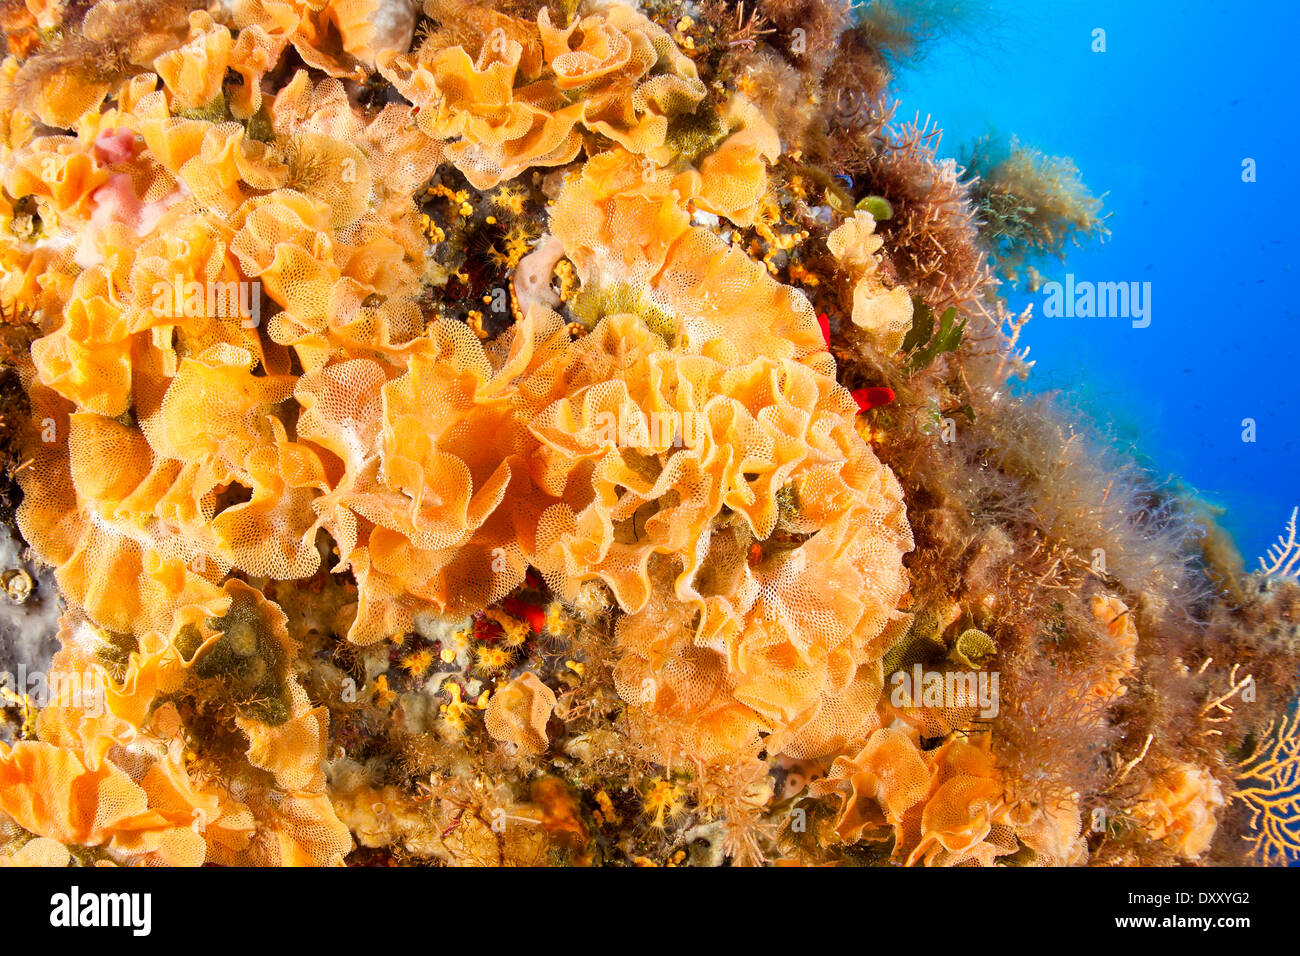 Neptune Bryozoan, Reteporella couchii, Ponza Ilsland, Mediterranean Sea, Italy Stock Photo